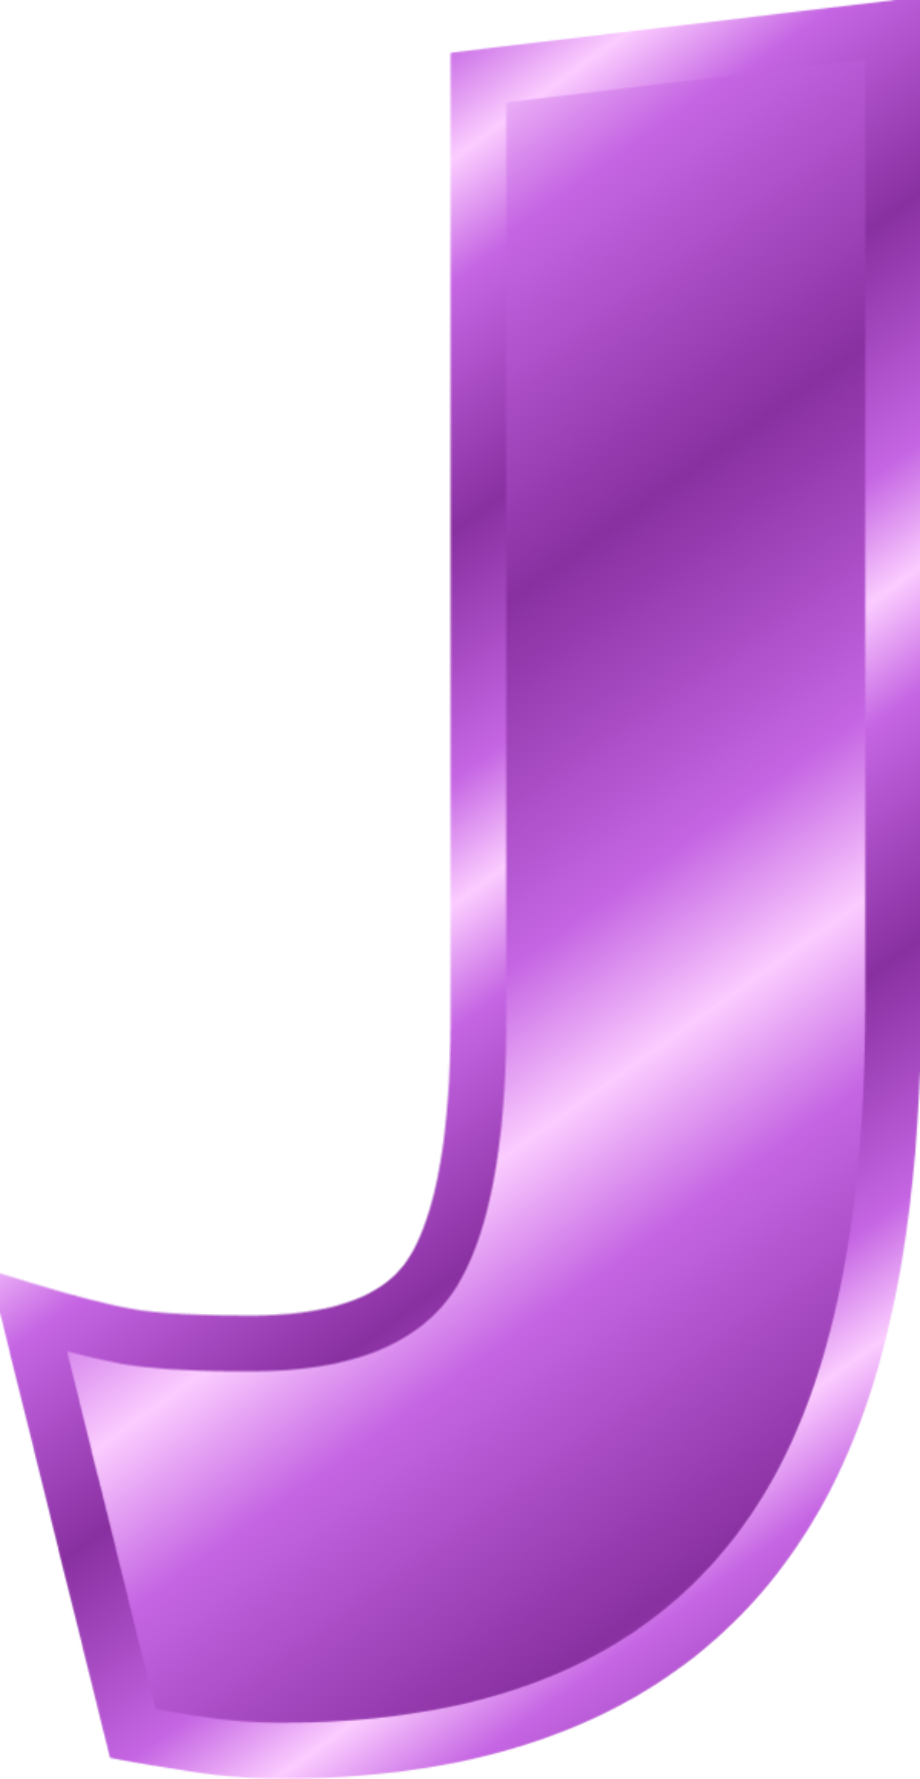 Download High Quality Flower clipart purple alphabet Transparent PNG